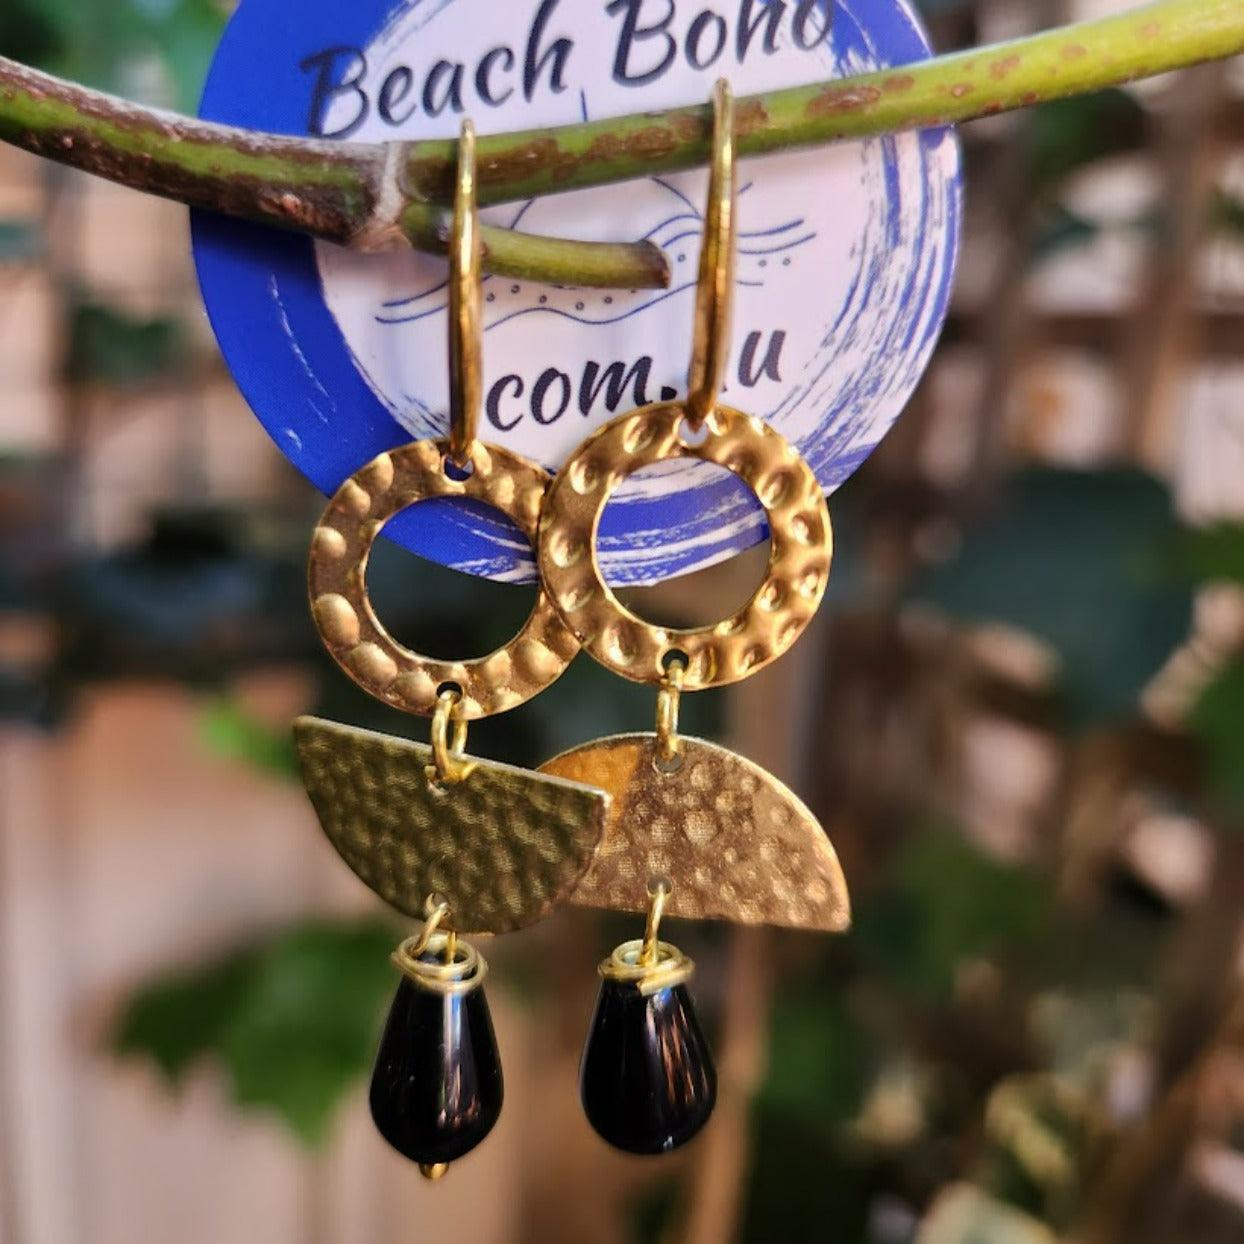 EMPRESS BLACK - HAMMERED GOLD ONYX EARRINGS - Premium earrings from www.beachboho,com.au - Just $40! Shop now at www.beachboho.com.au